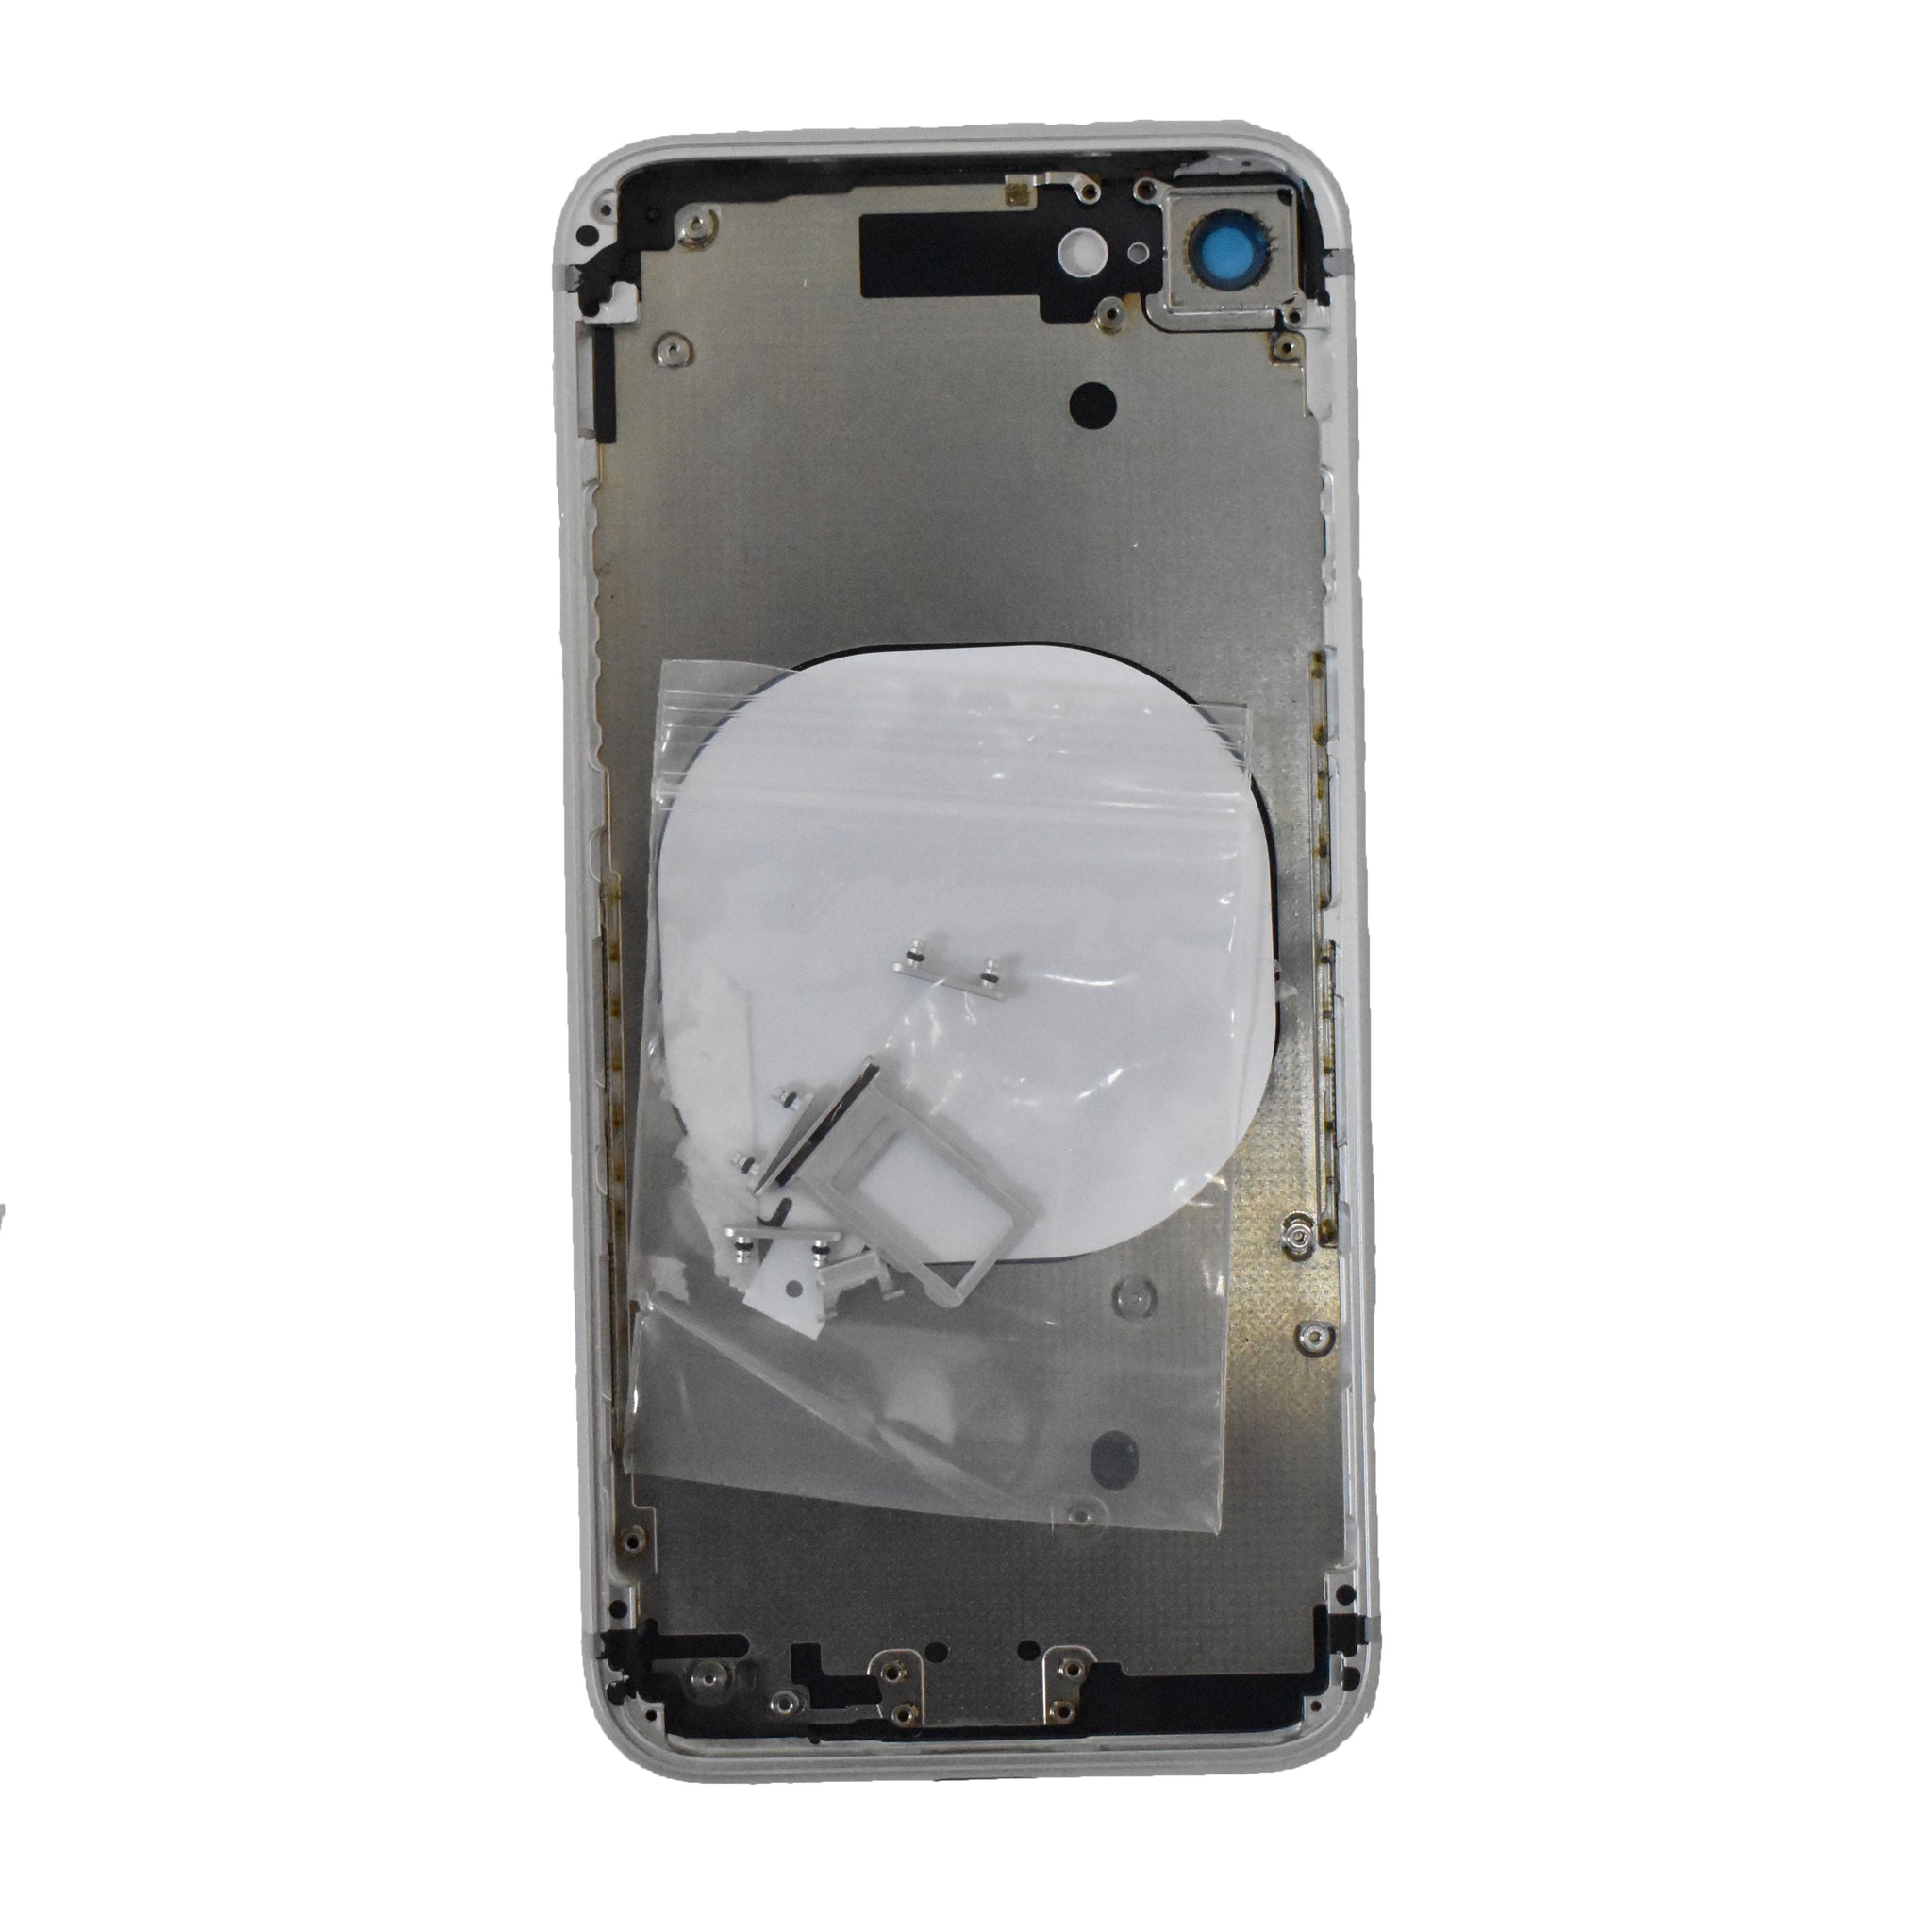 Carcasa iPhone 8 blanca – FLUXX REFACCIONES PARA CELULAR